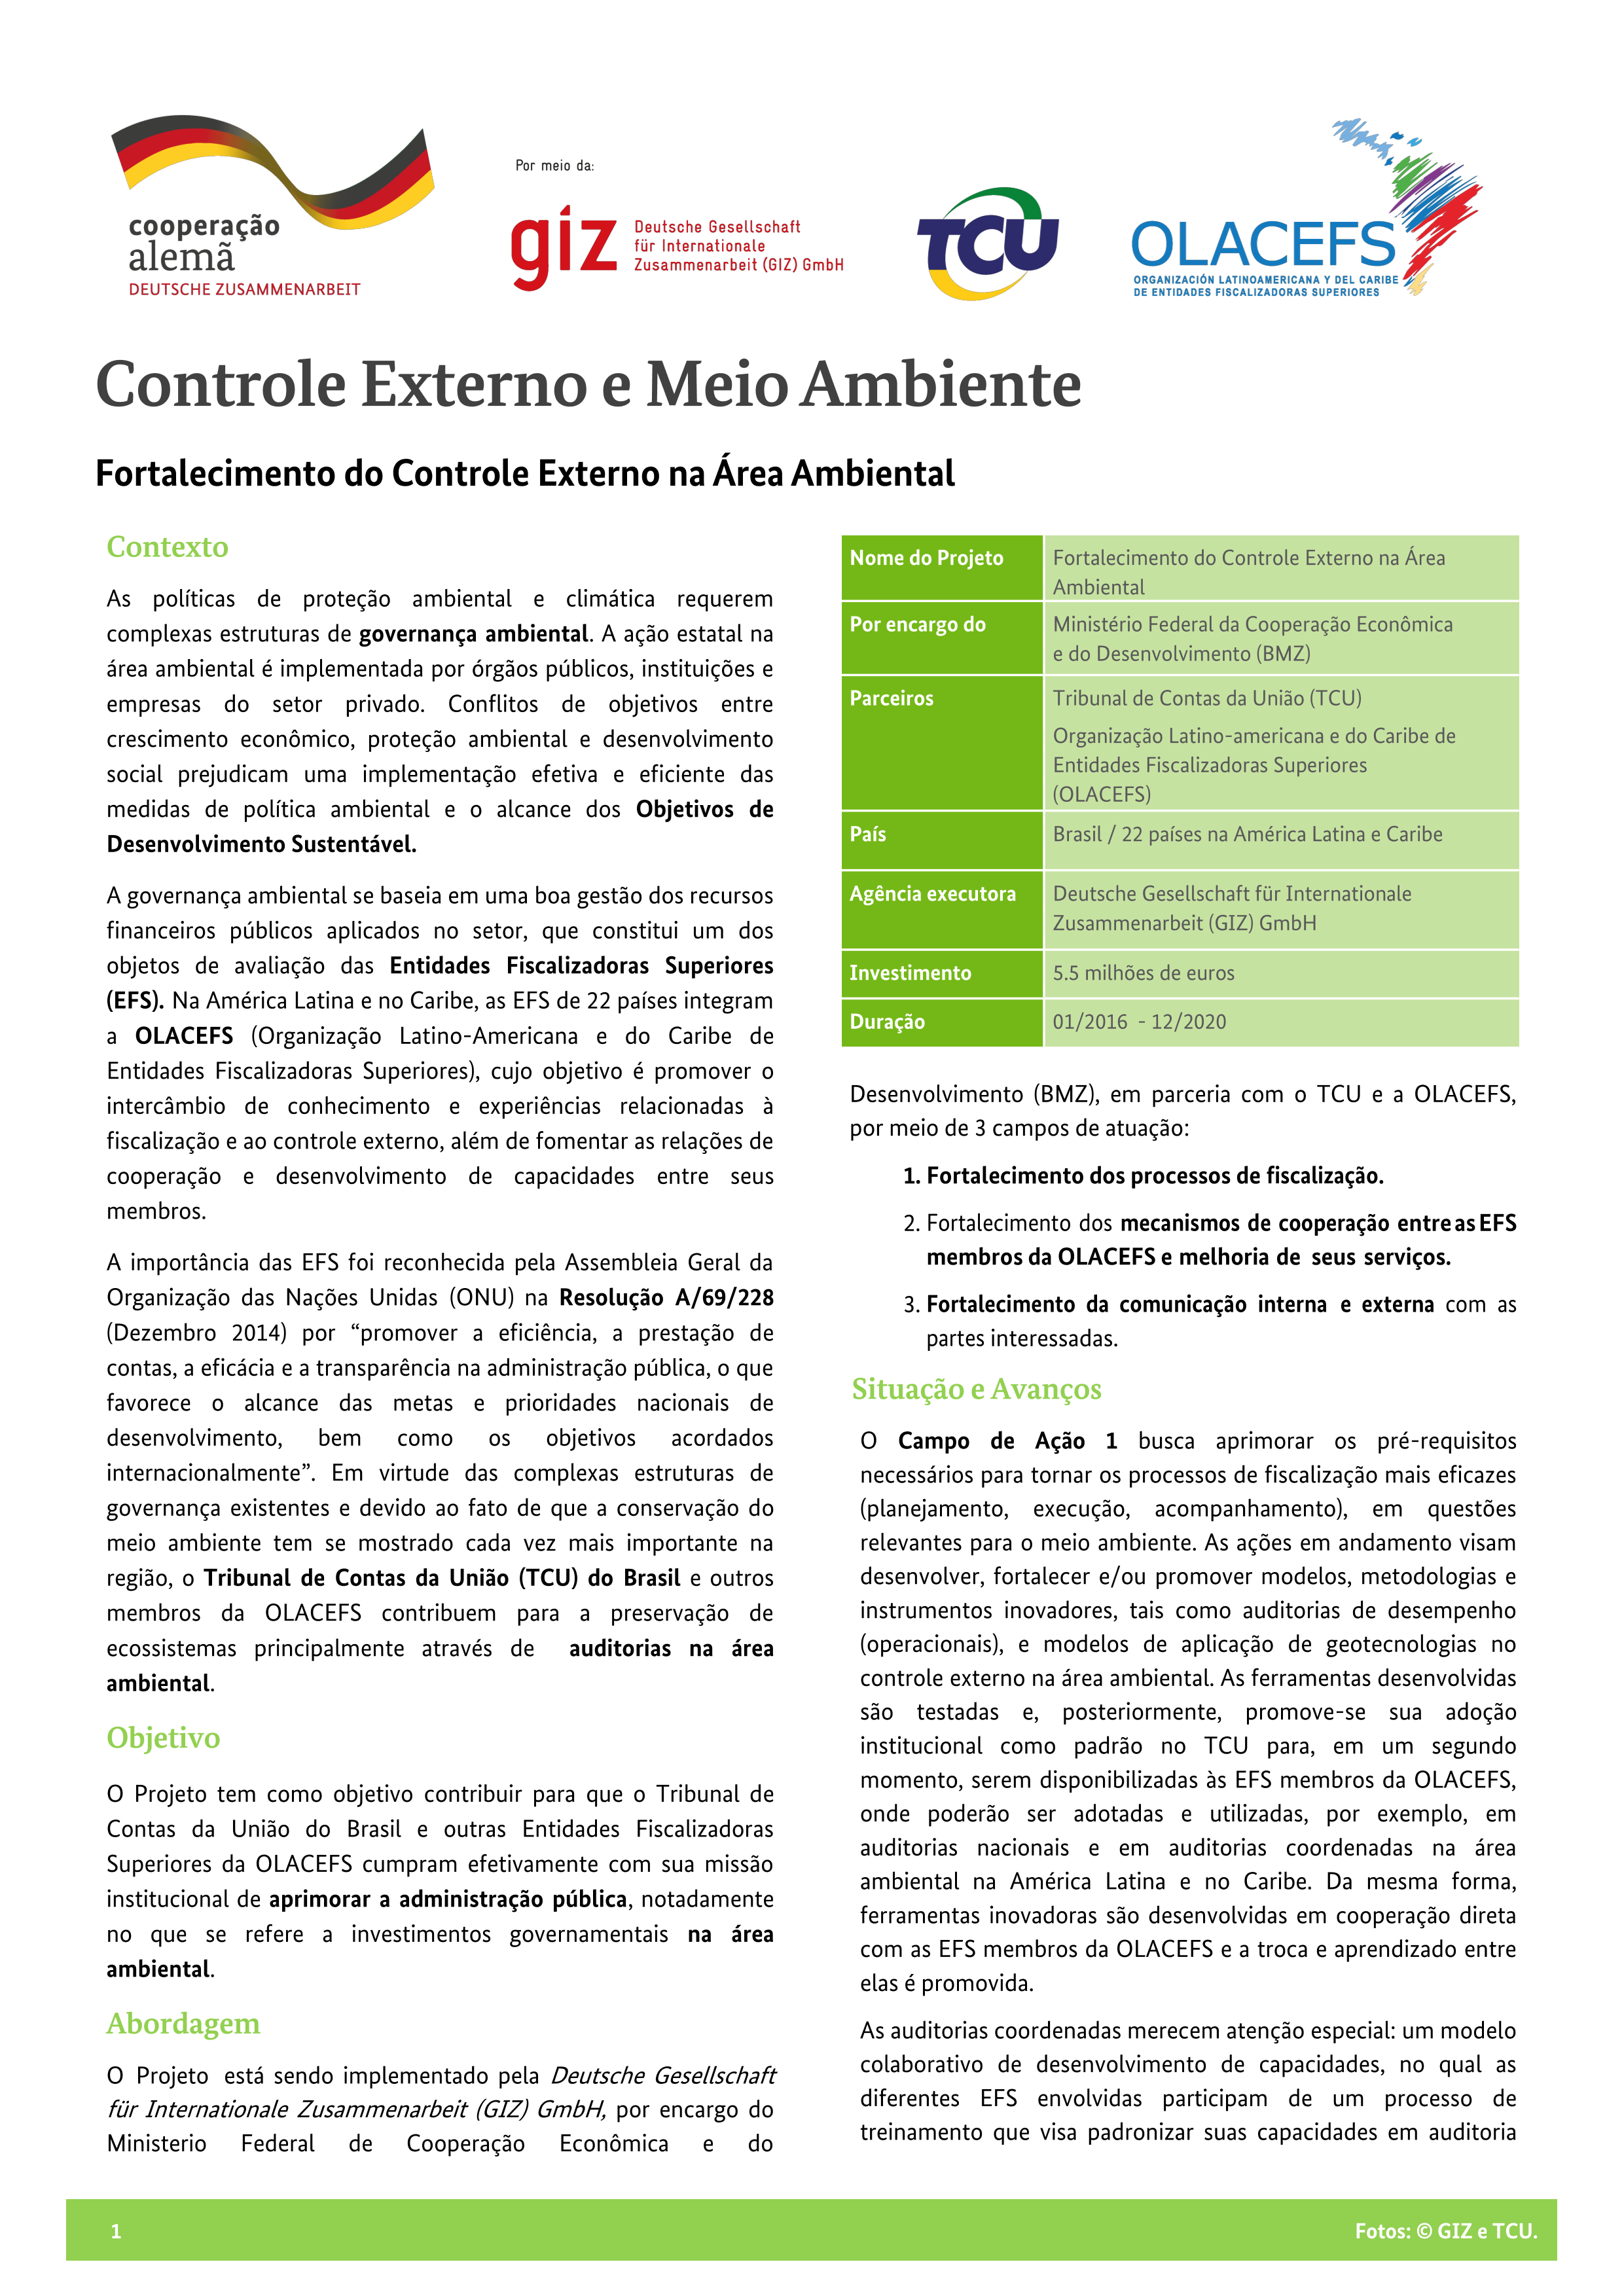 controlo externo e meio ambiente - giz.png